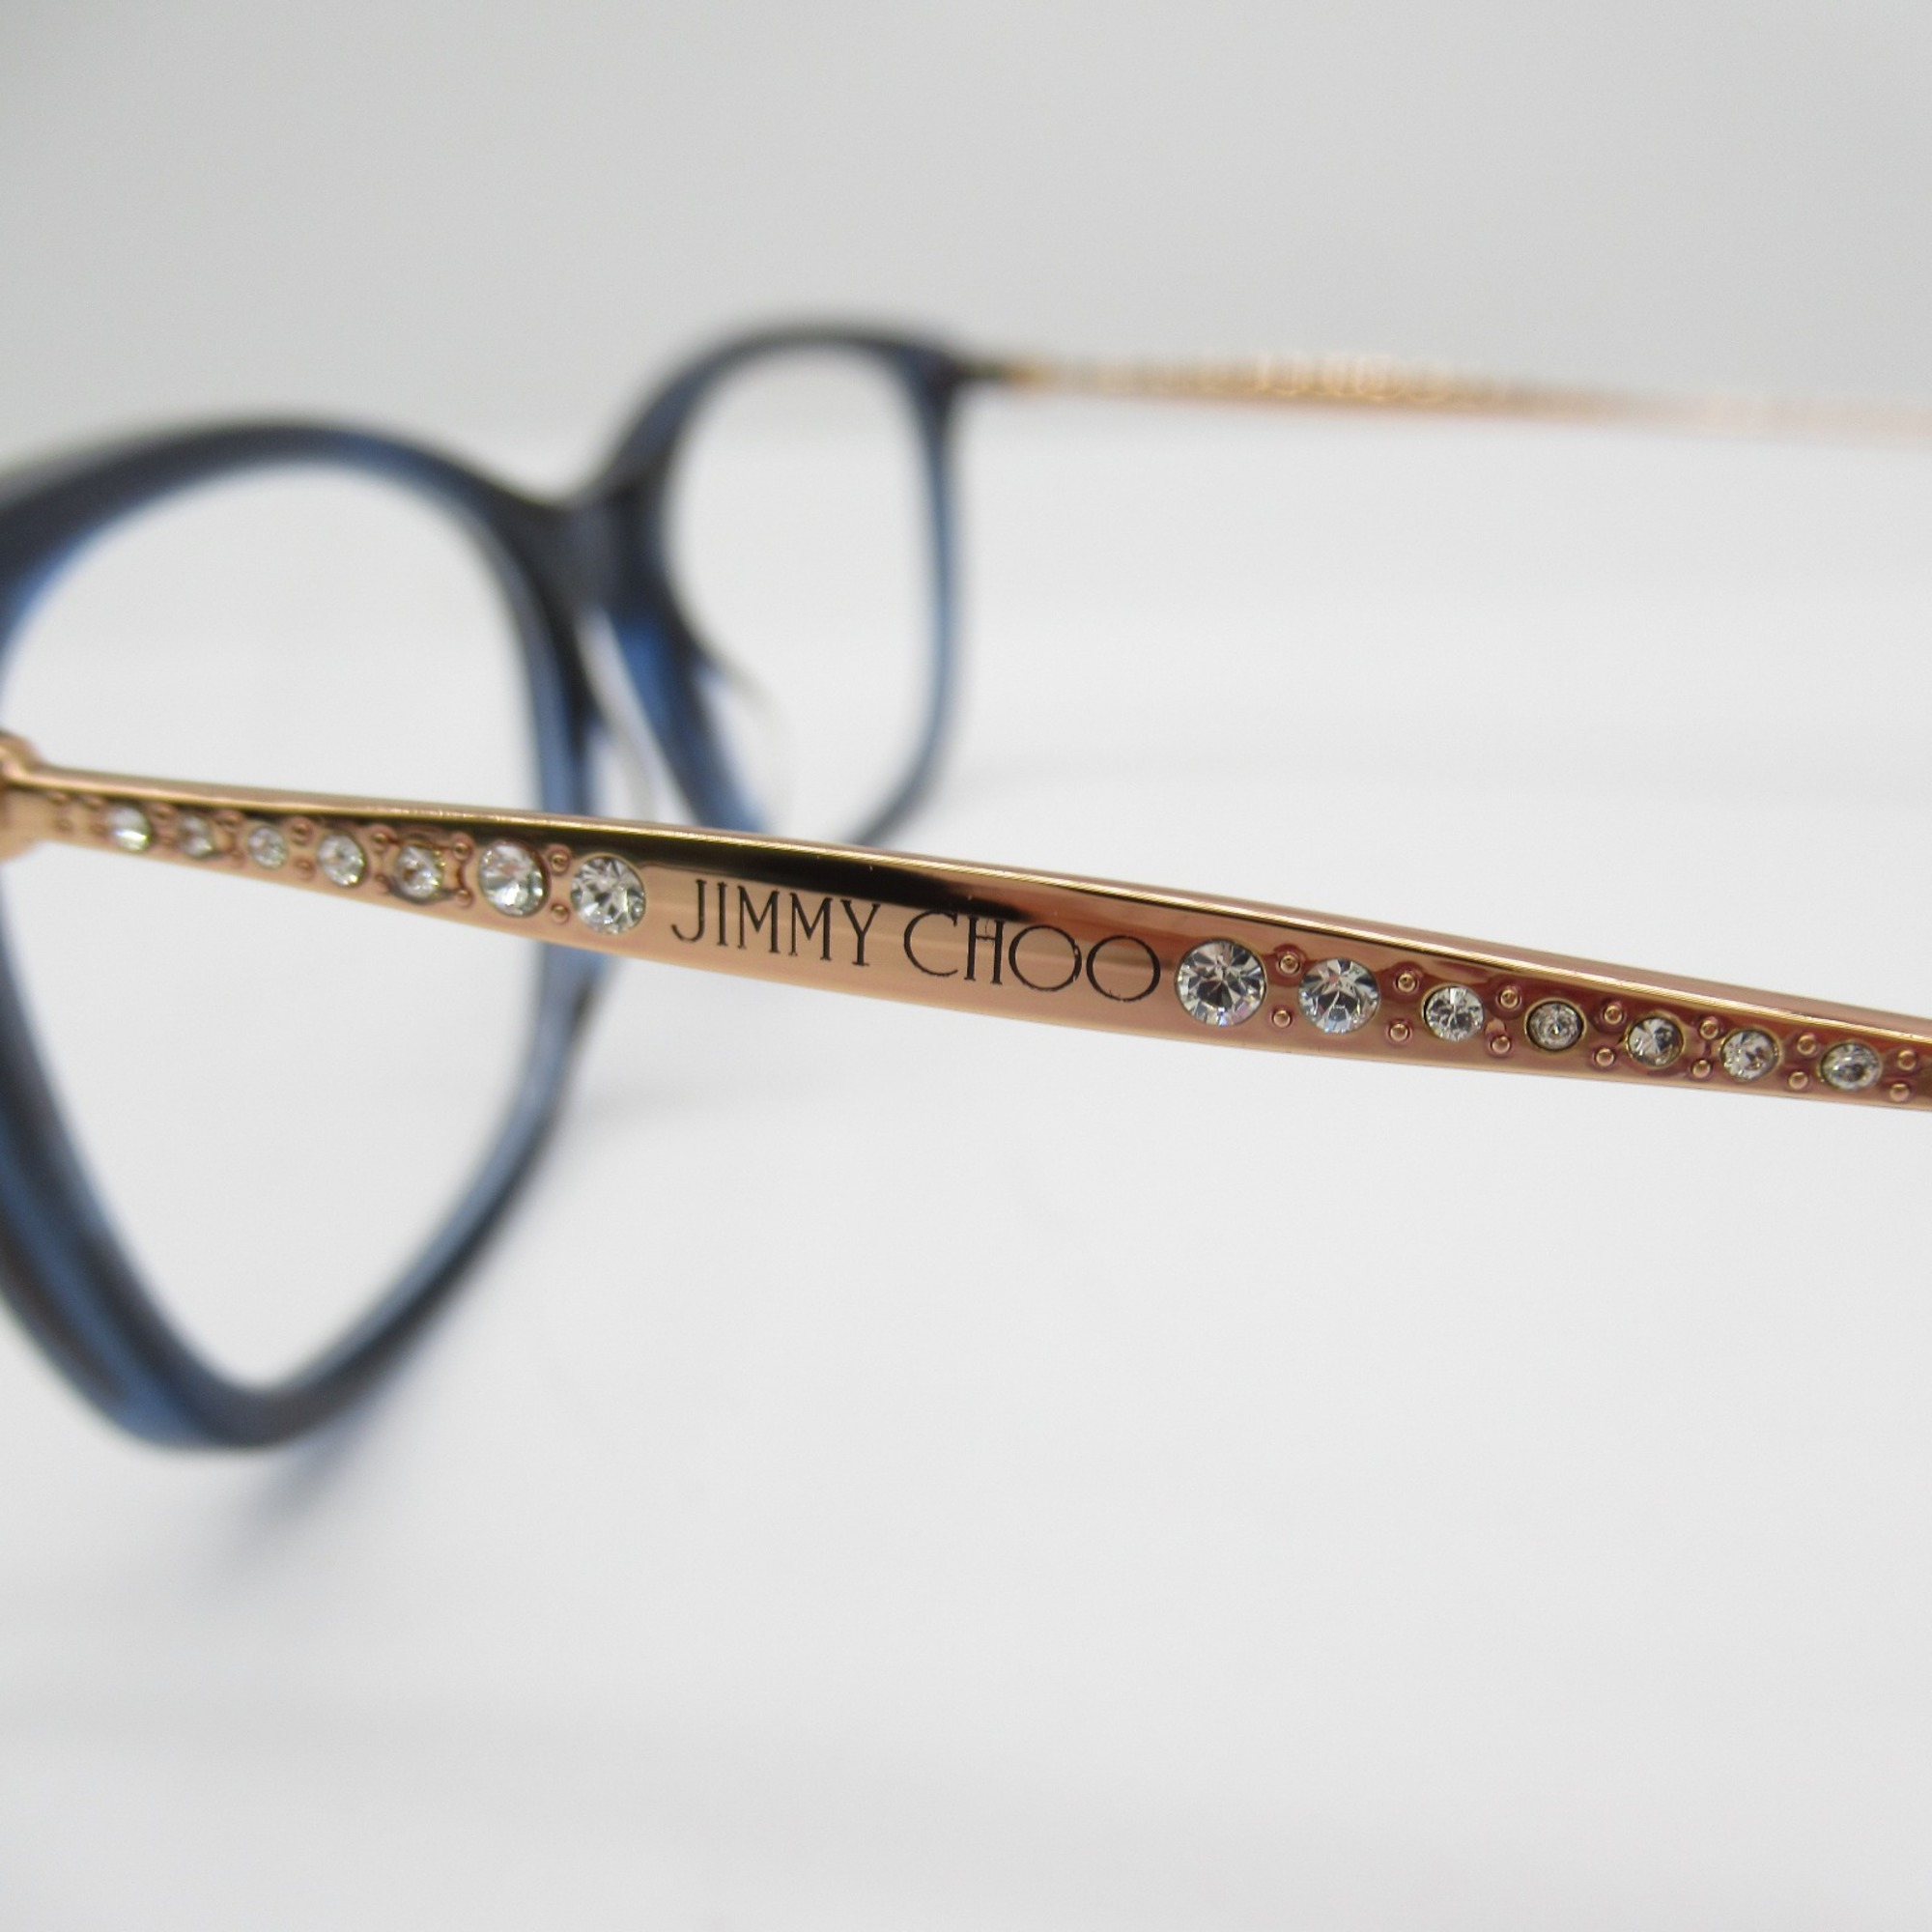 JIMMY CHOO Date Glasses Glasses Frame Blue Stainless Steel Plastic 298 JBW(52)